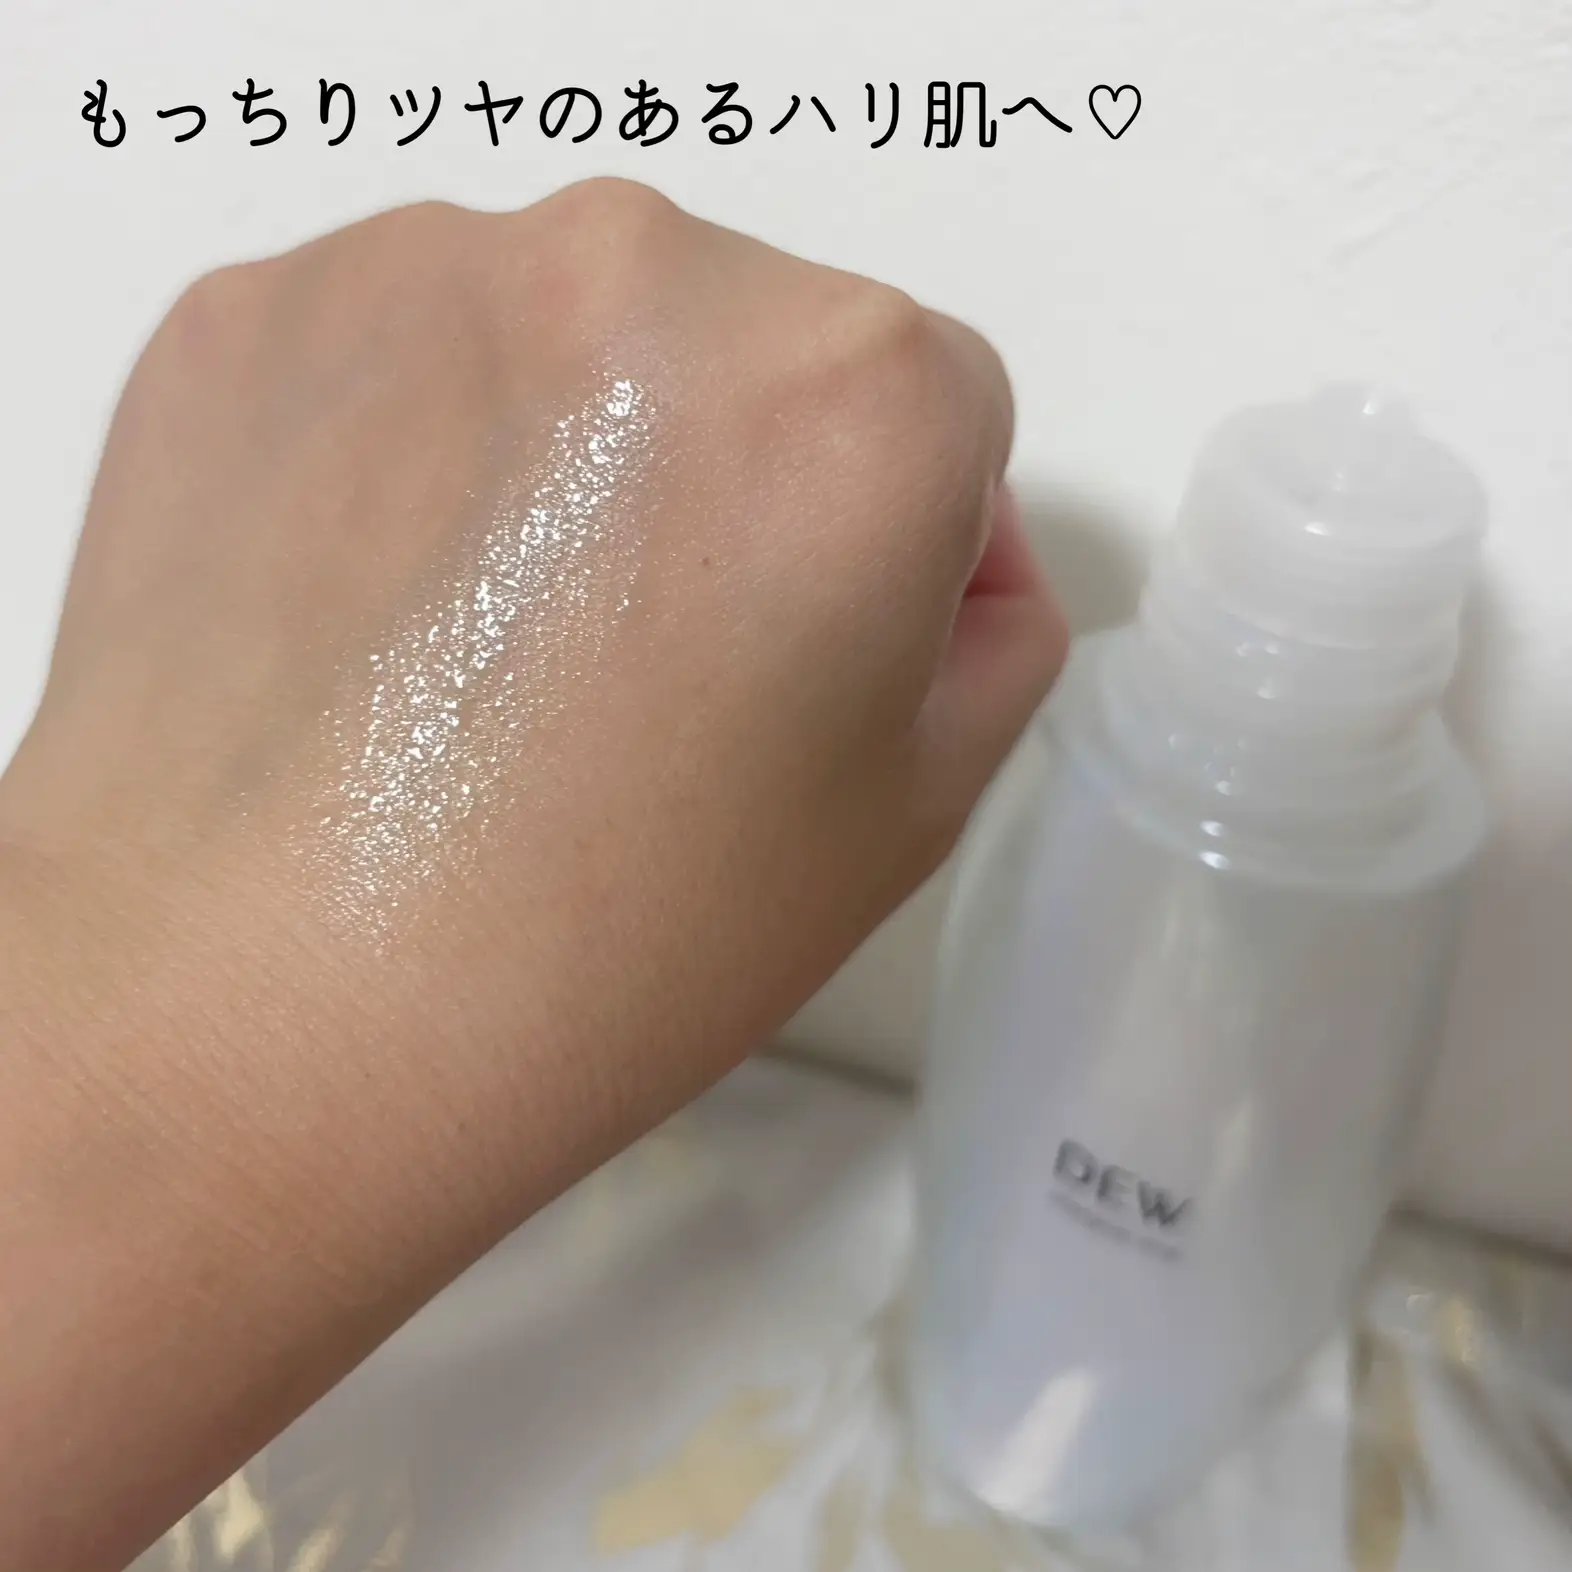 DEW ハリ密肌体験セット 10日分 洗顔 化粧水 乳液 クリーム - 化粧水 ...